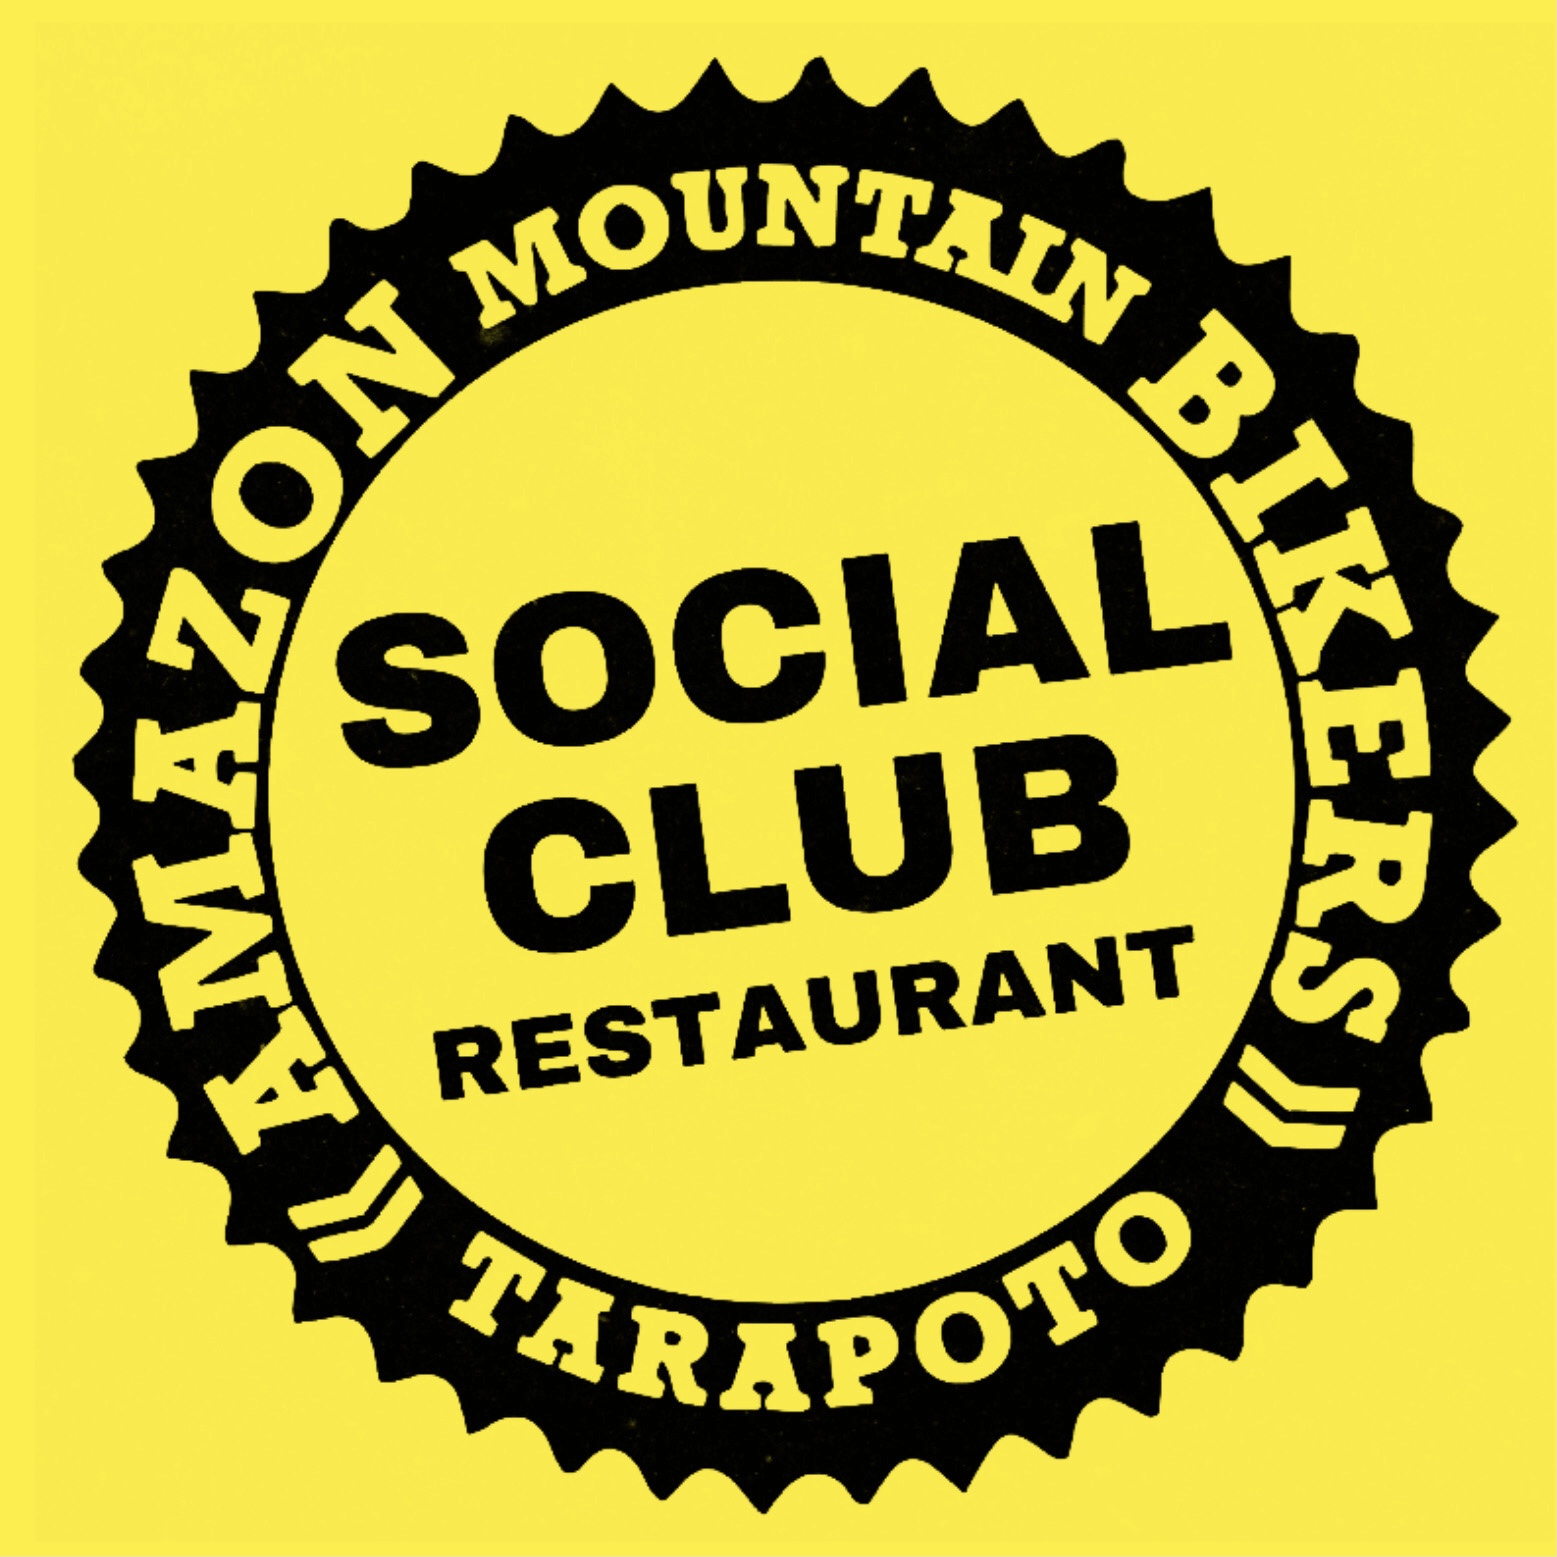 Social Club Restaurant - Amazon Mountain Bikers